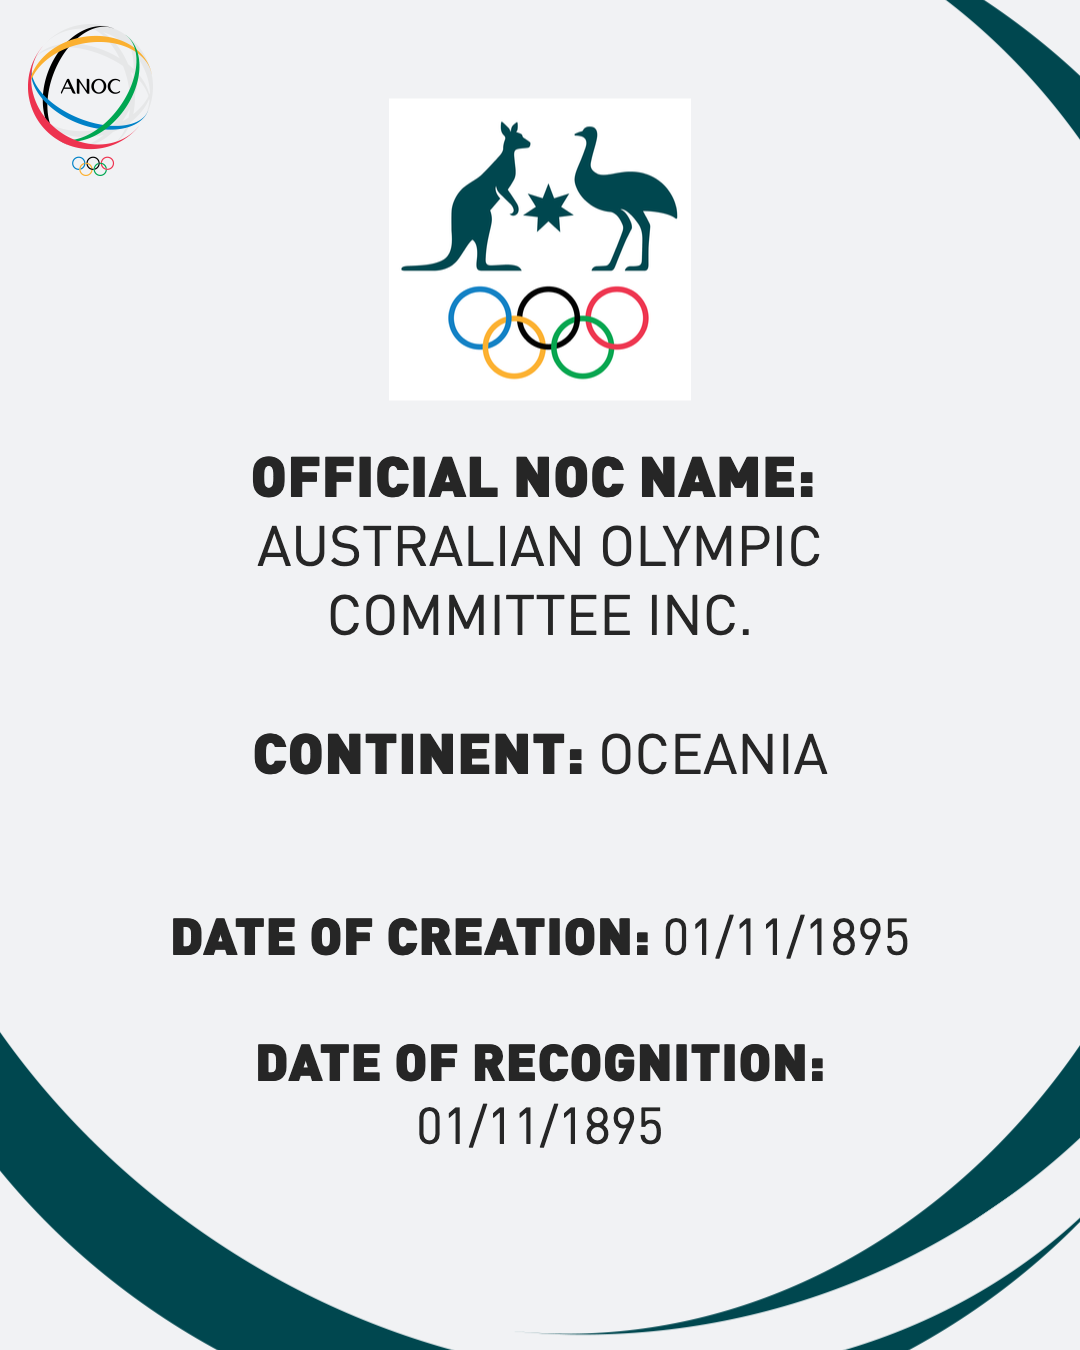 Australian Olympic Committee Inc.